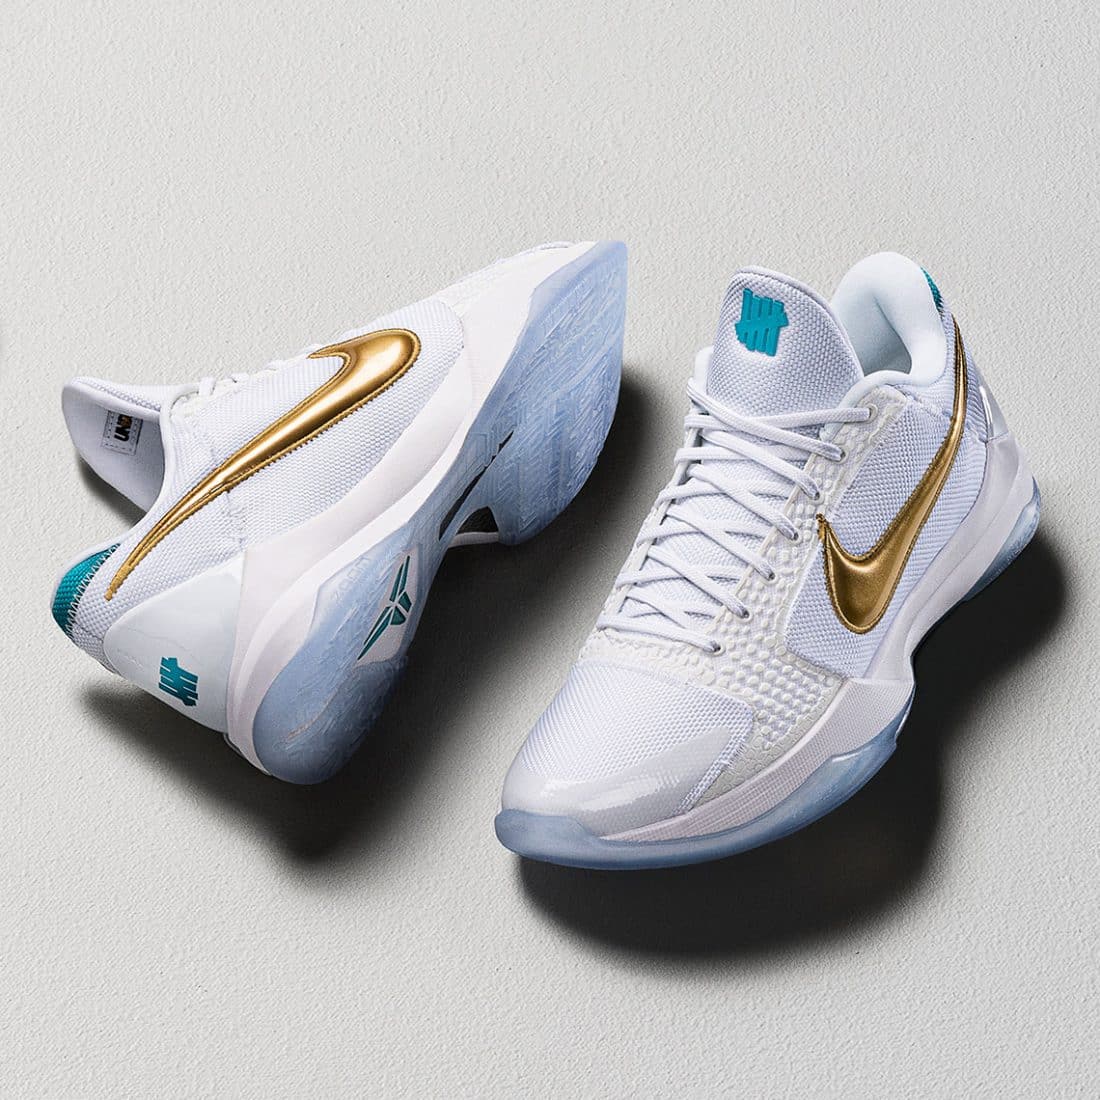 Nike Kobe 5 Protro x Undefeated "What If" Pack - Le Site de la Sneaker